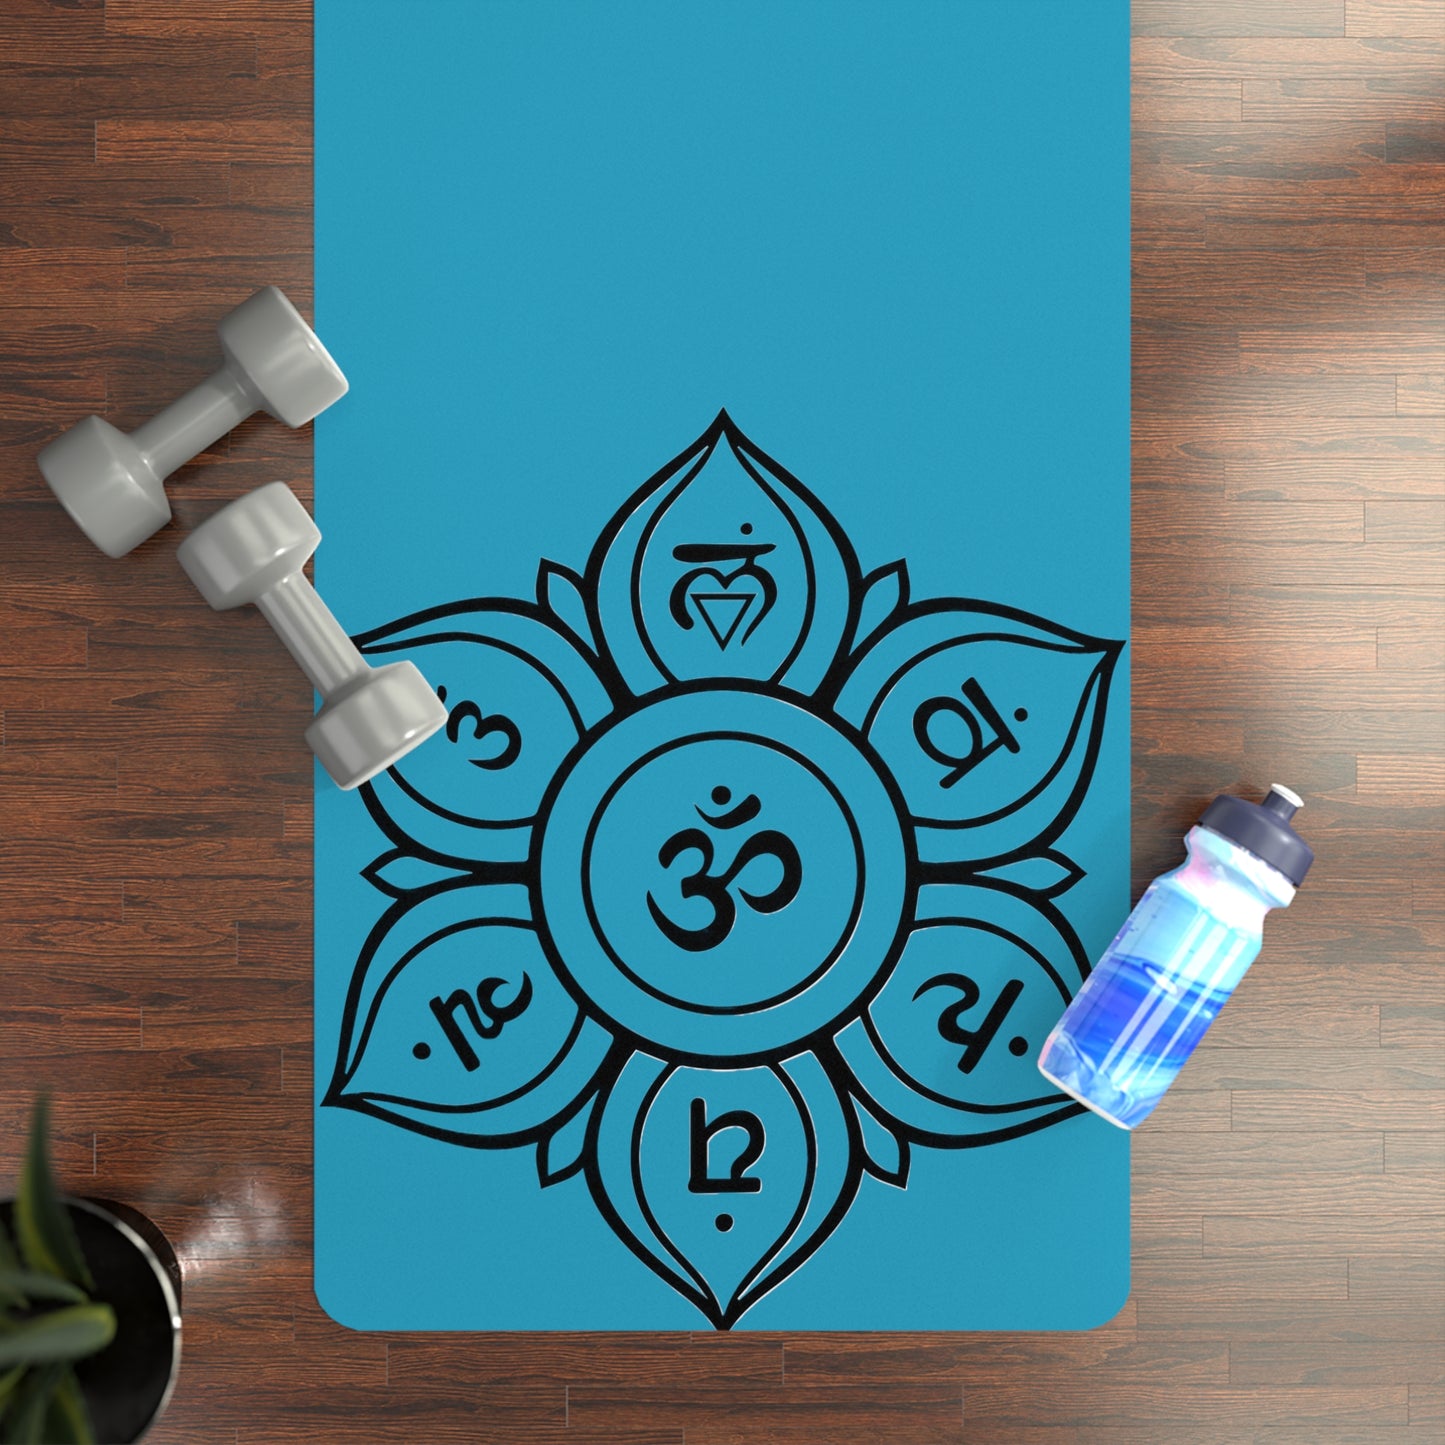 Elevate Your Practice Blue Ohm Mandala Rubber Yoga Mat